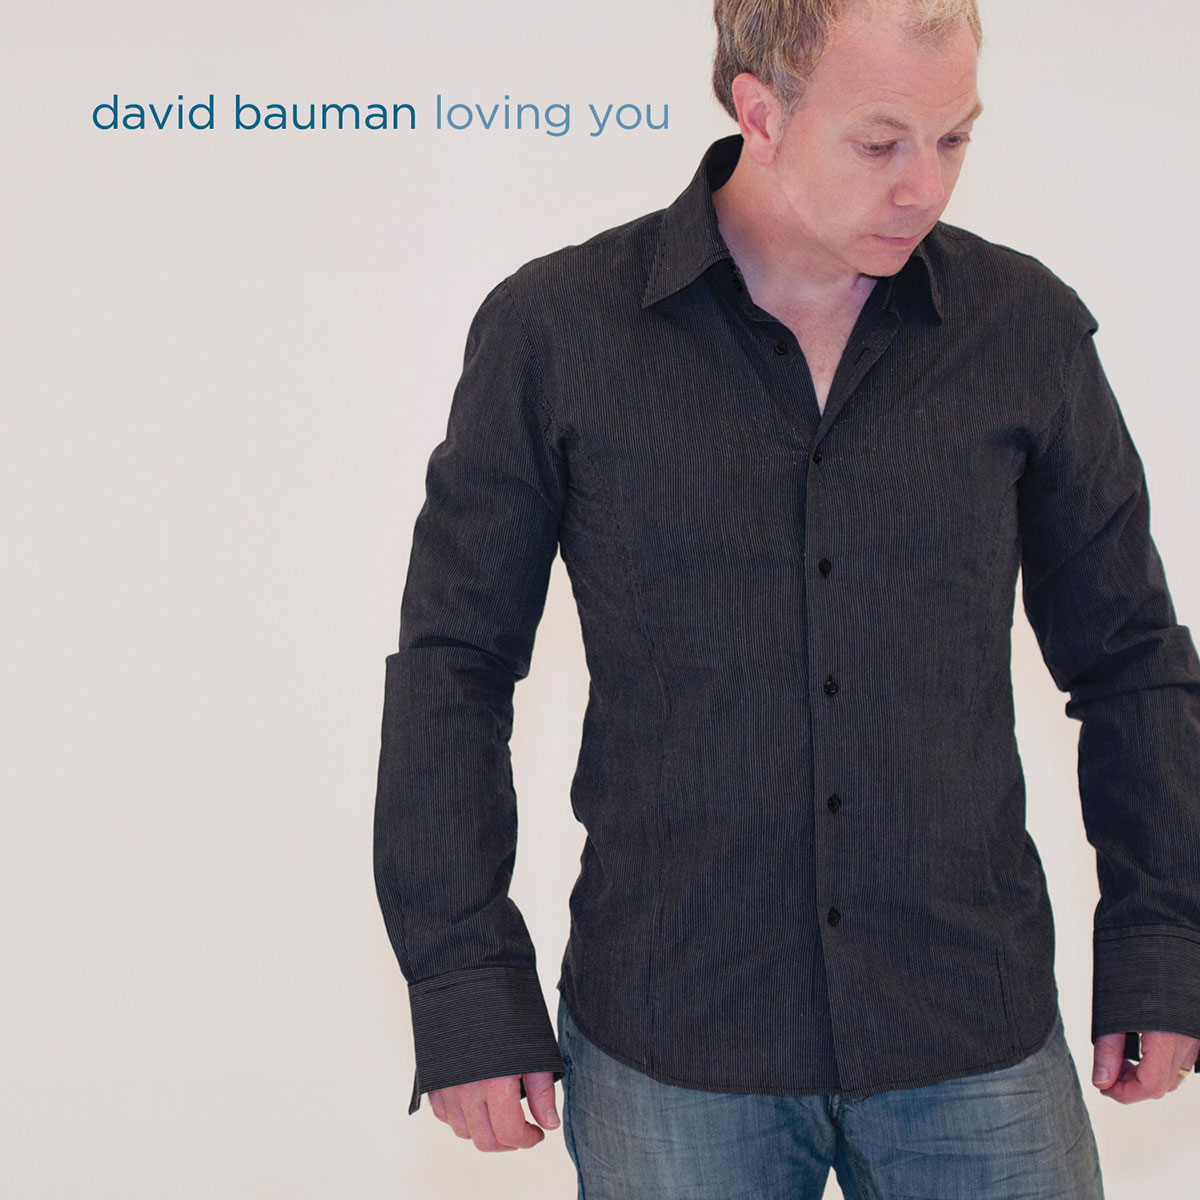 David Bauman Loving You CD cover